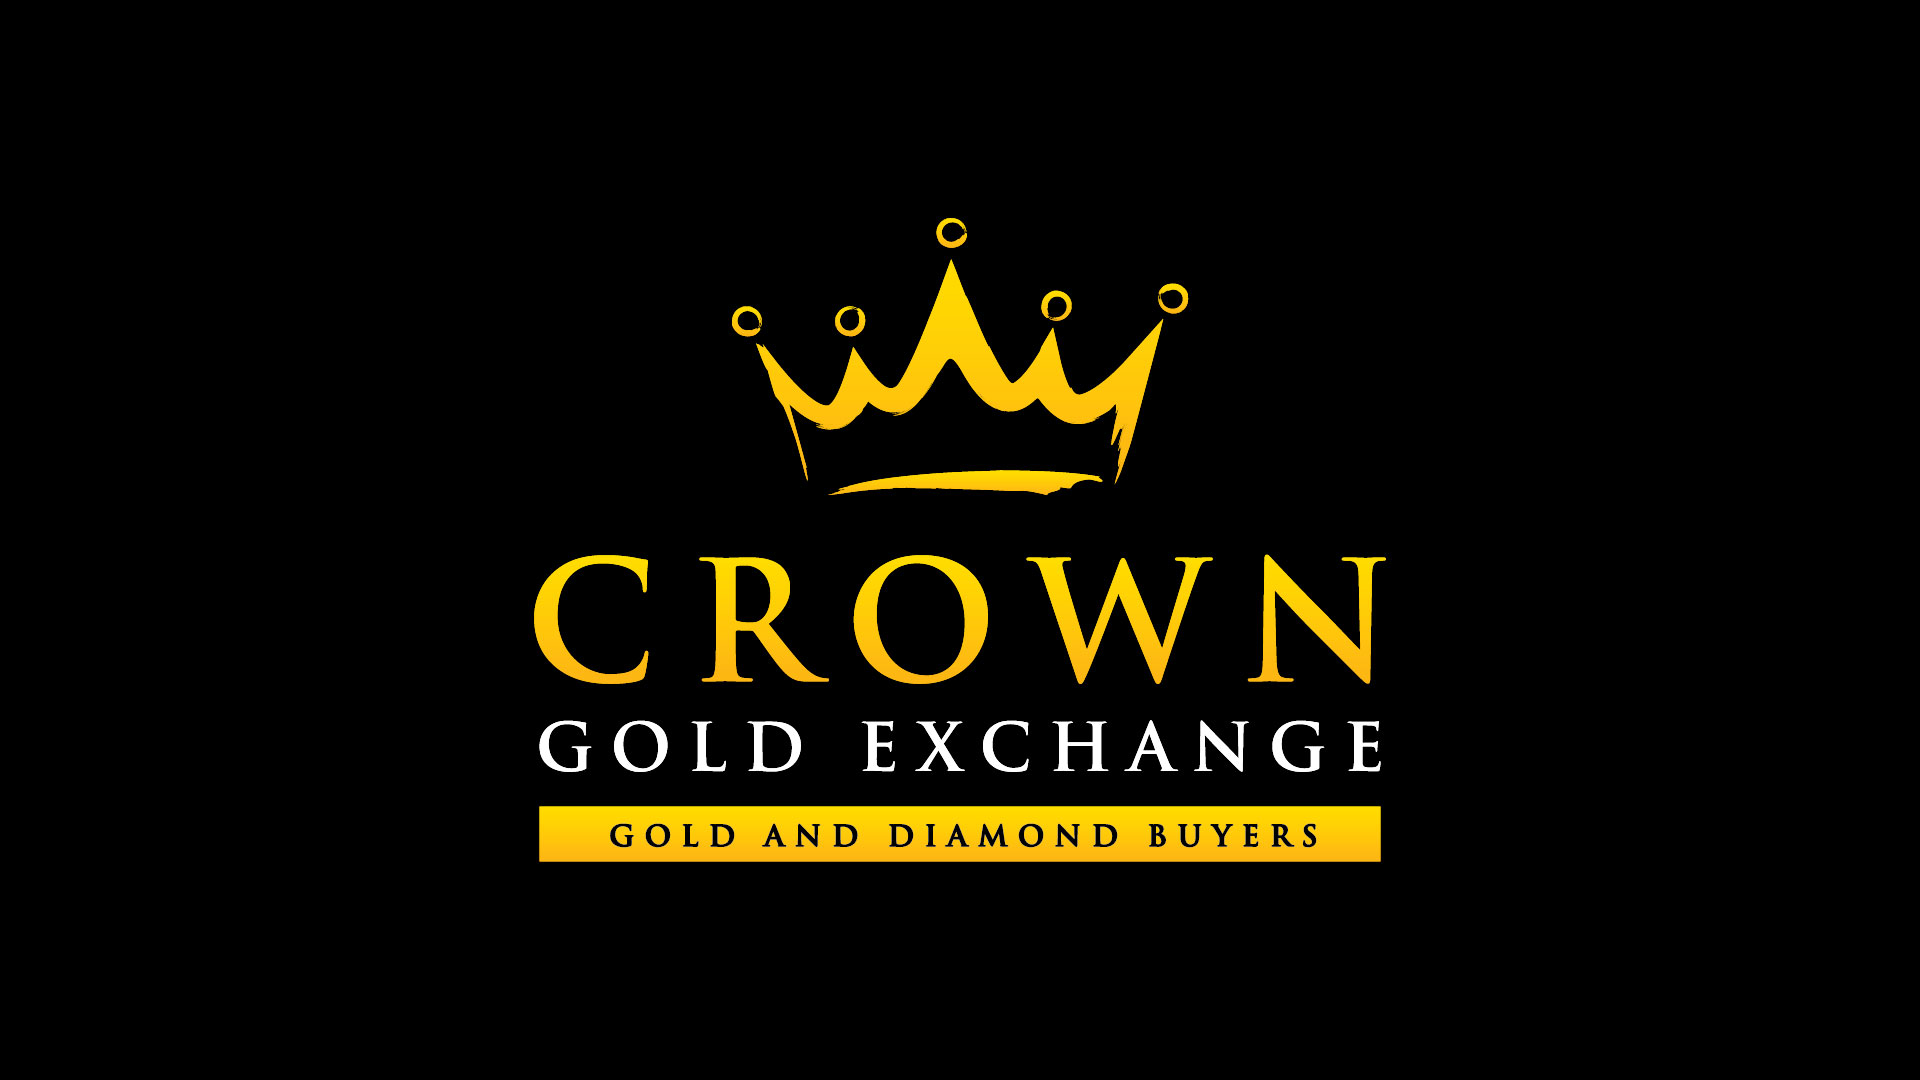 (c) Crowngoldexchange.com